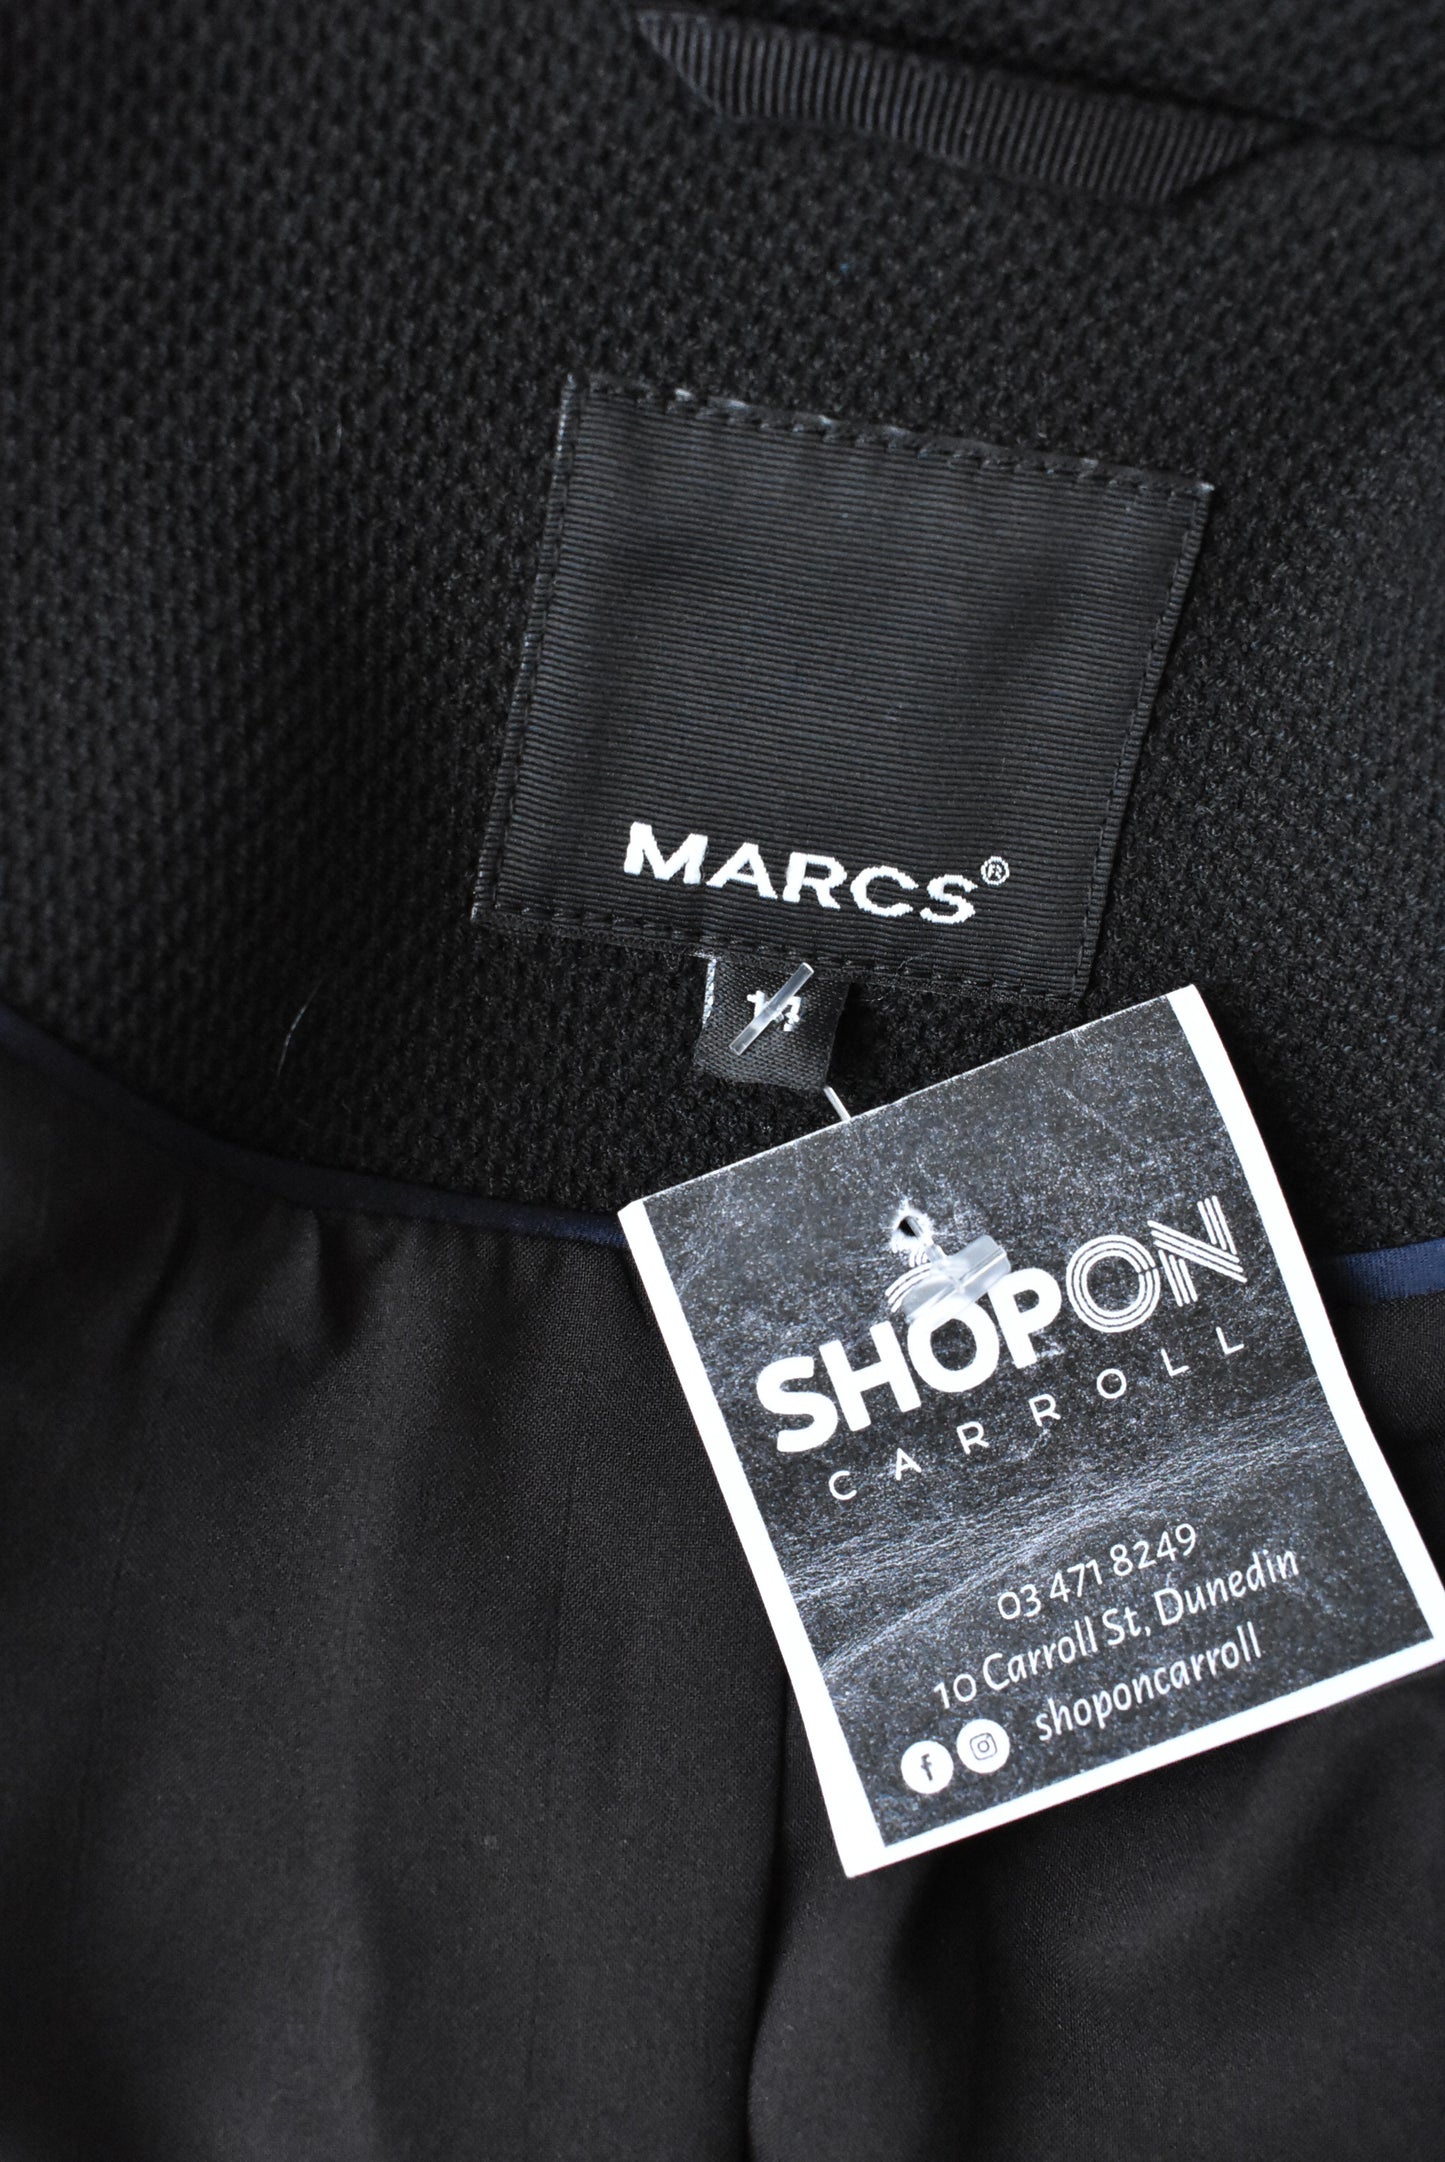 Marcs black textured blazer, size 14